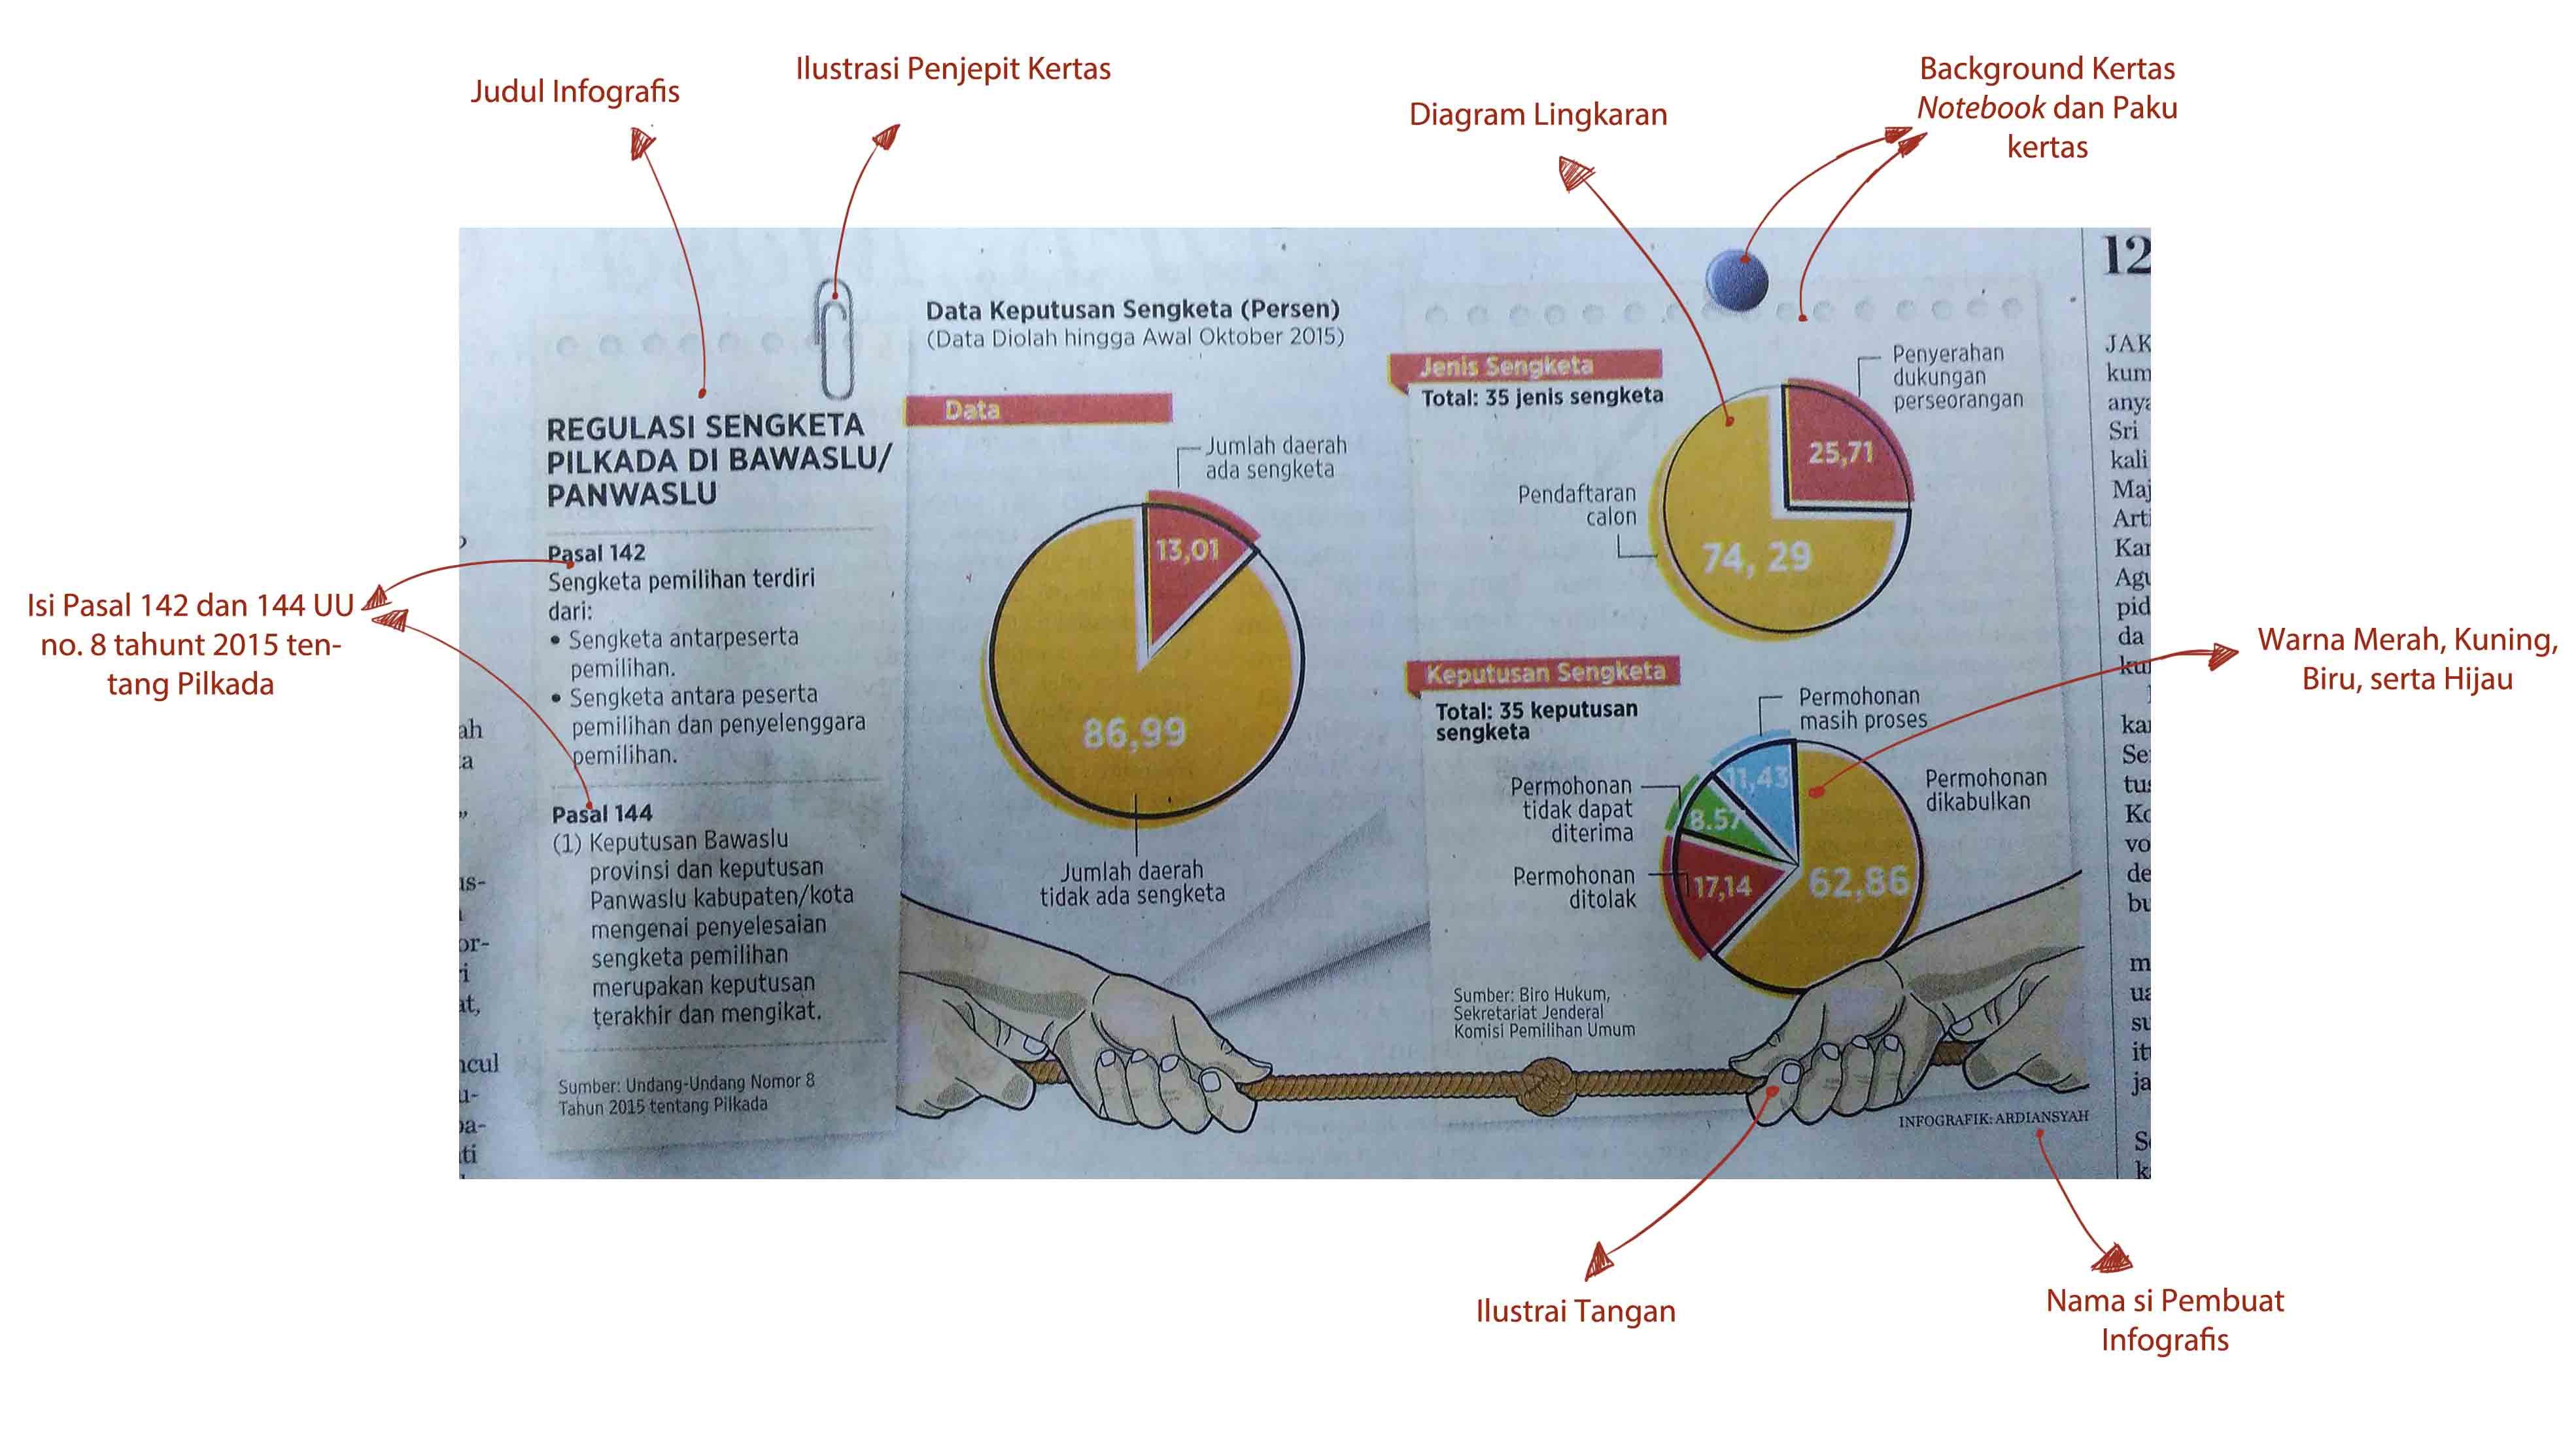 Regulasi Sengketa Pilkada Dalam Infografis Oleh Muhammad Mahrozi